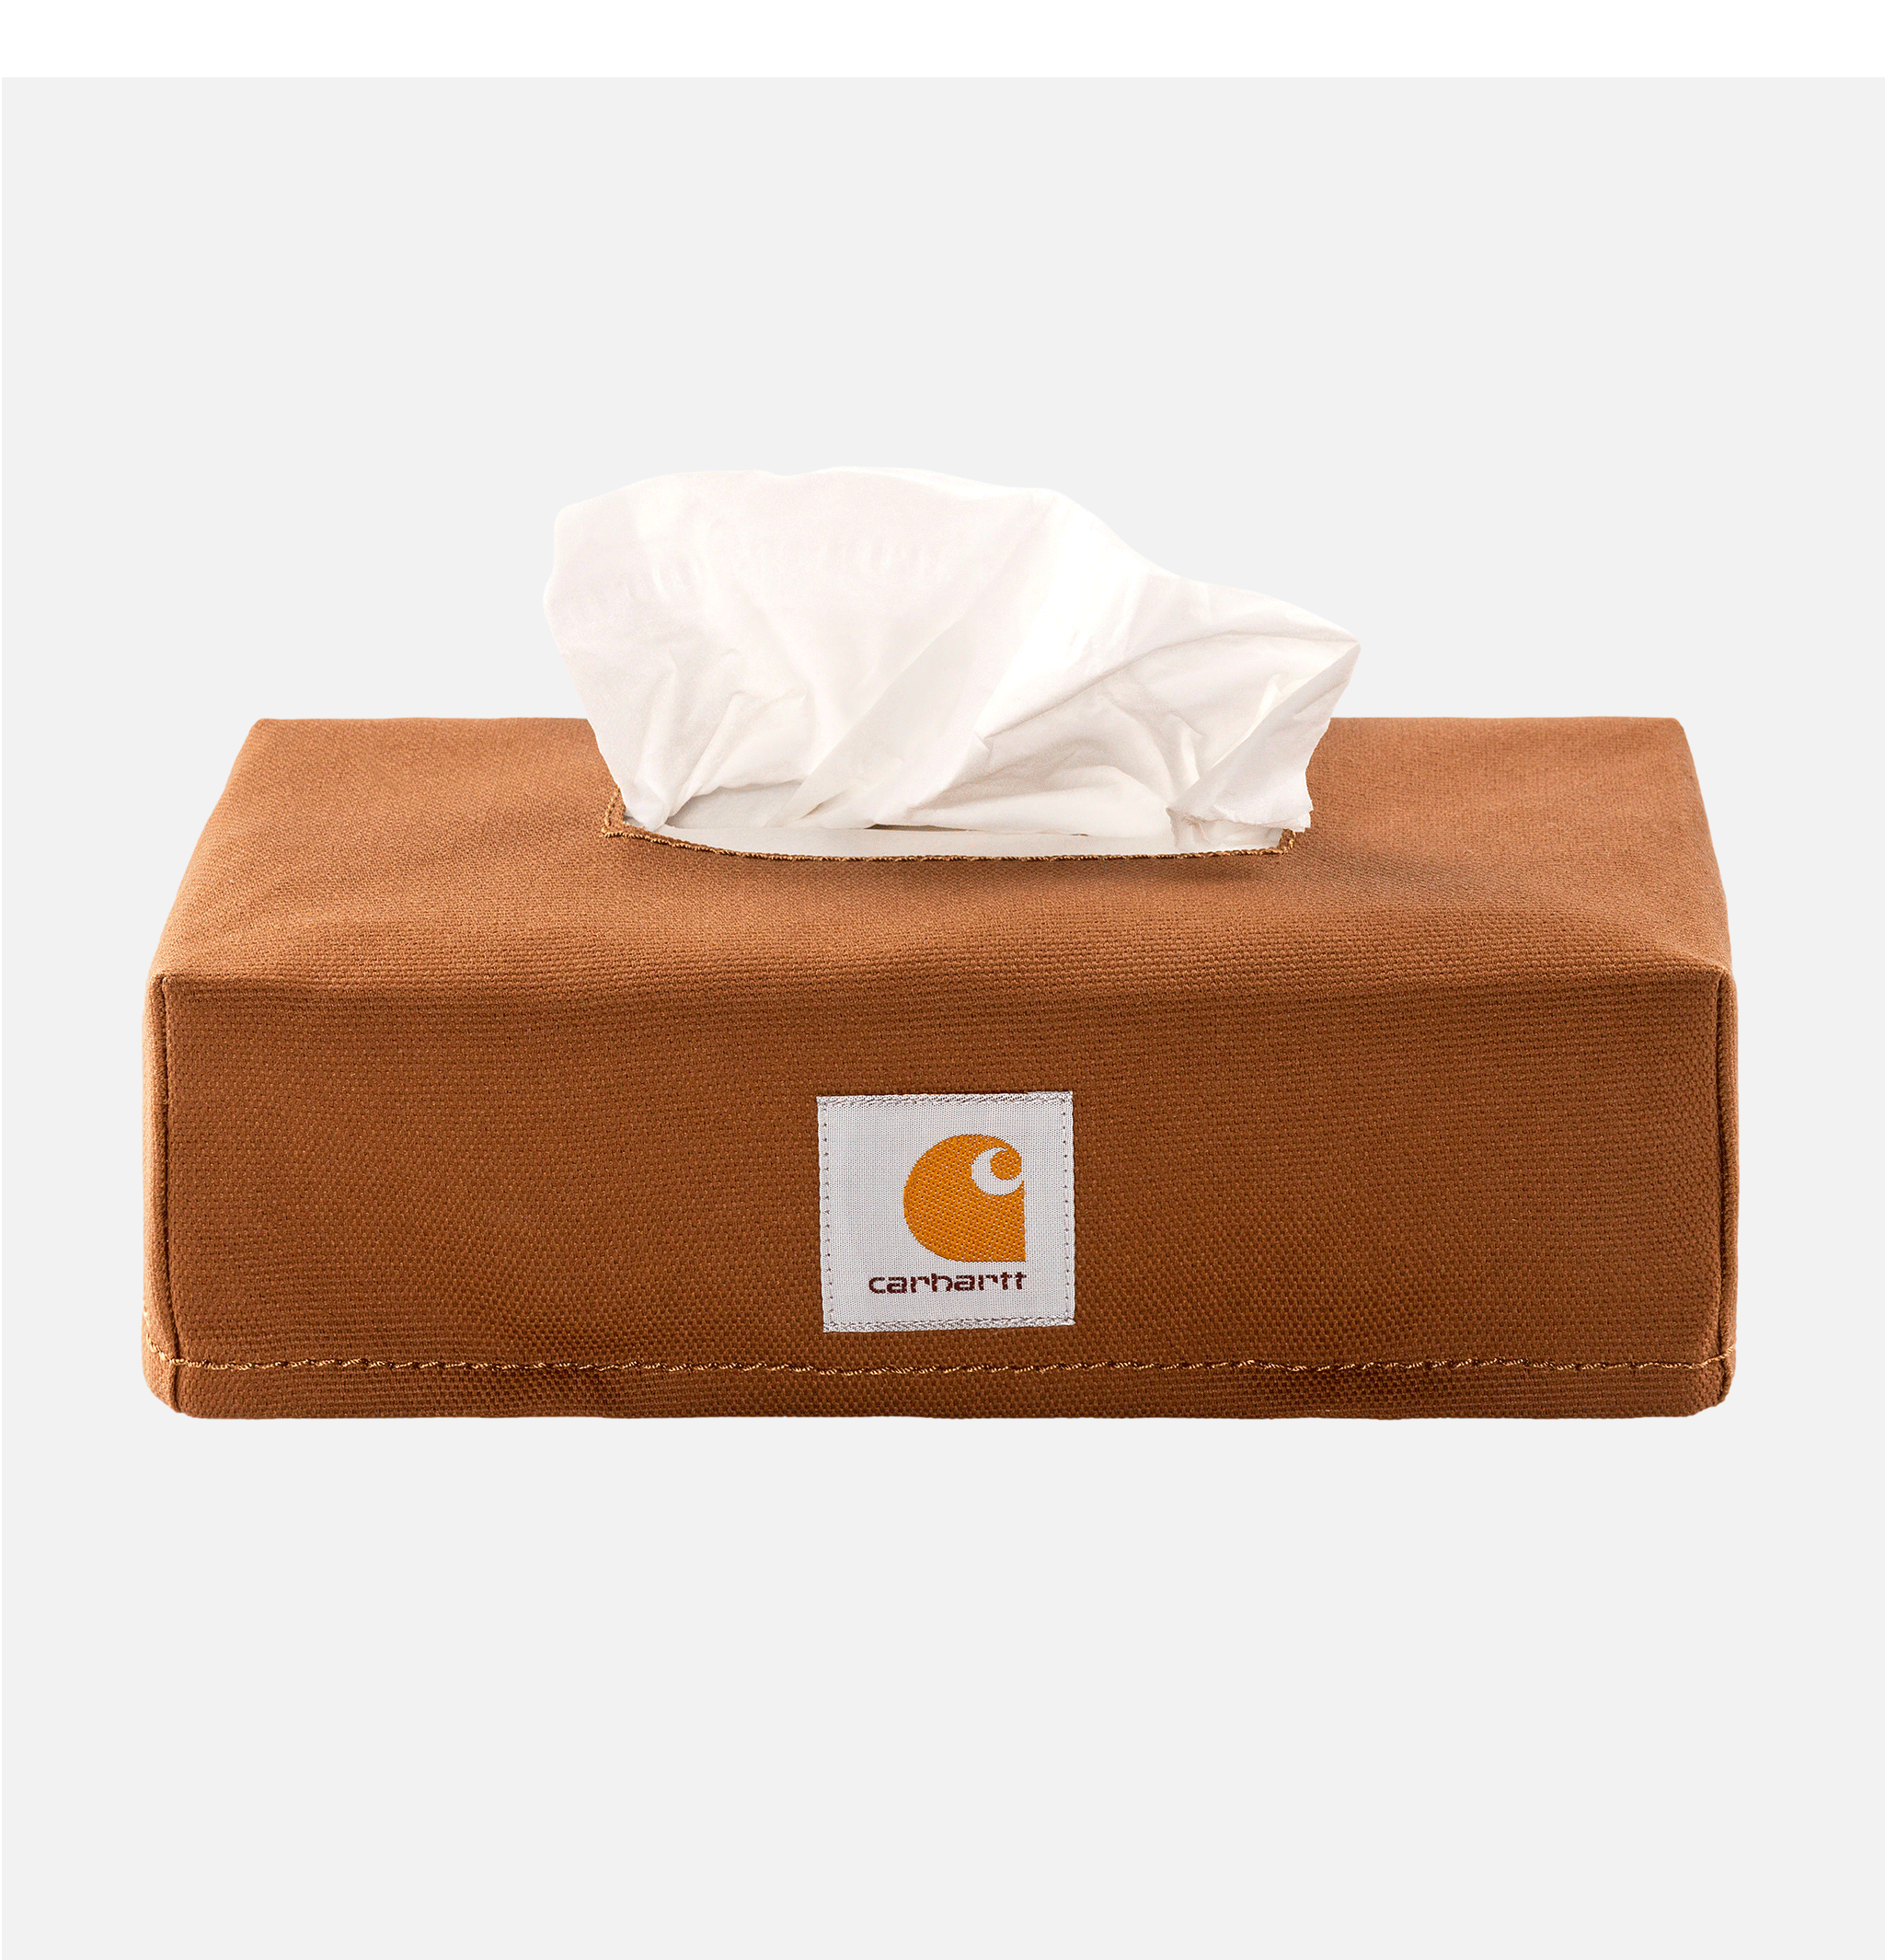 Carhartt tissue box cover Hamilton Brow